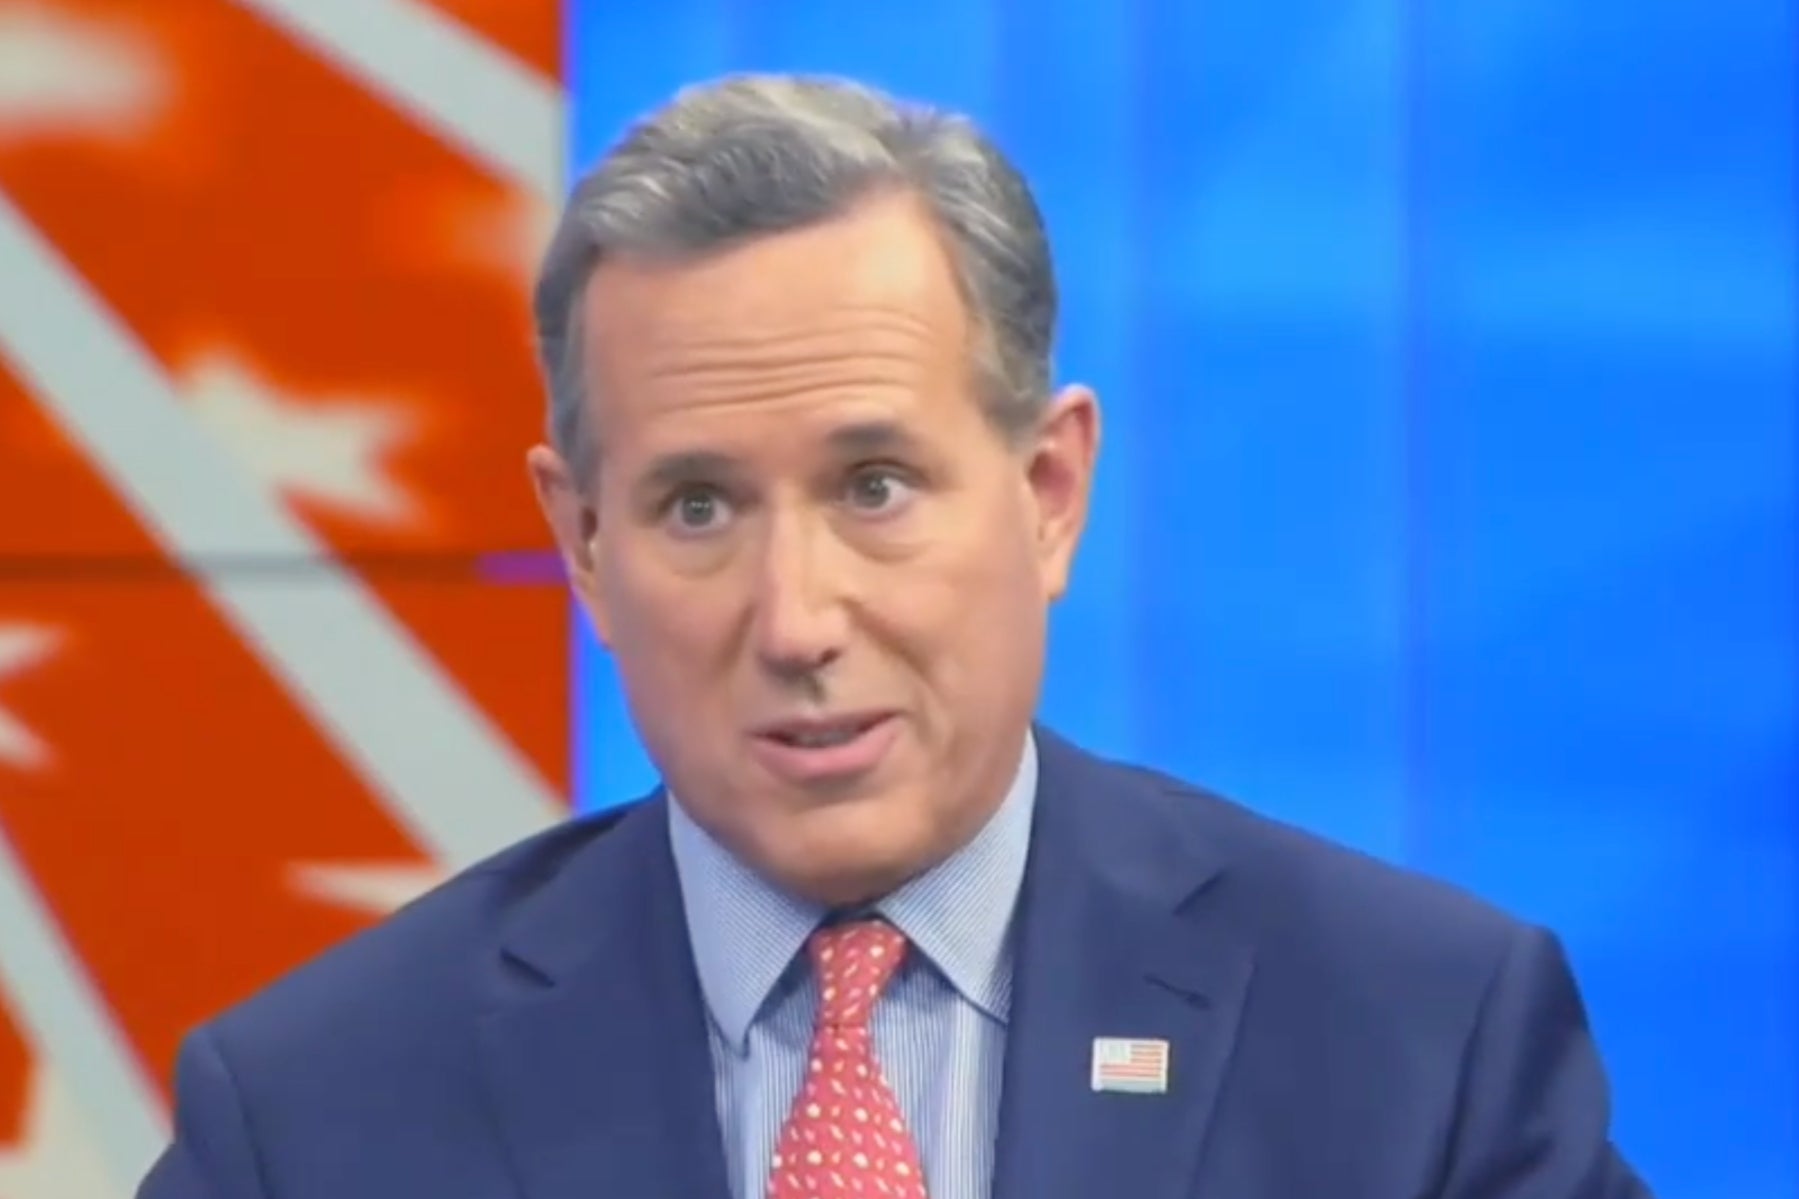 Rick Santorum appeared on Newsmax on Tuesday